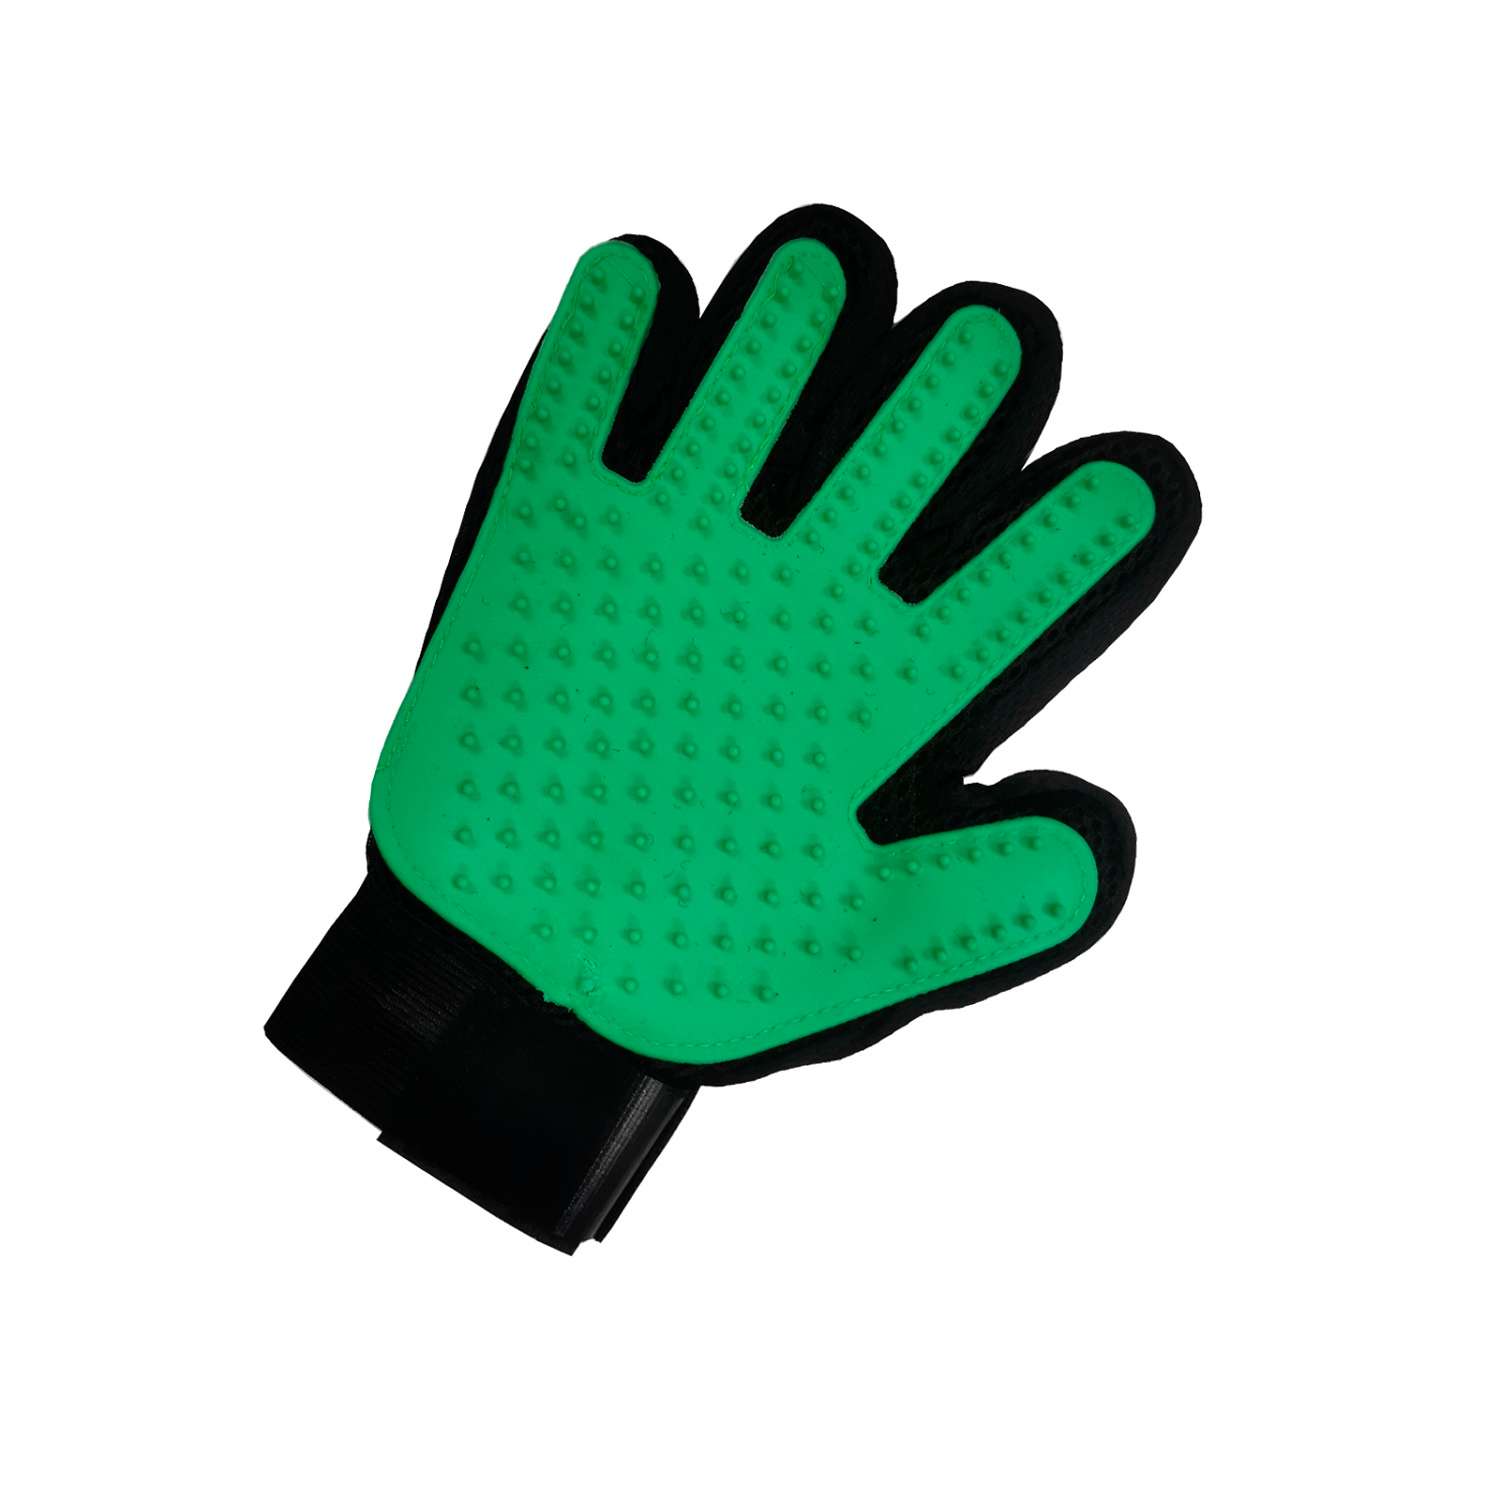 Перчатка для груминга Stefan массажная для вычесывания шерсти животных зеленая 23х17см - фото 1